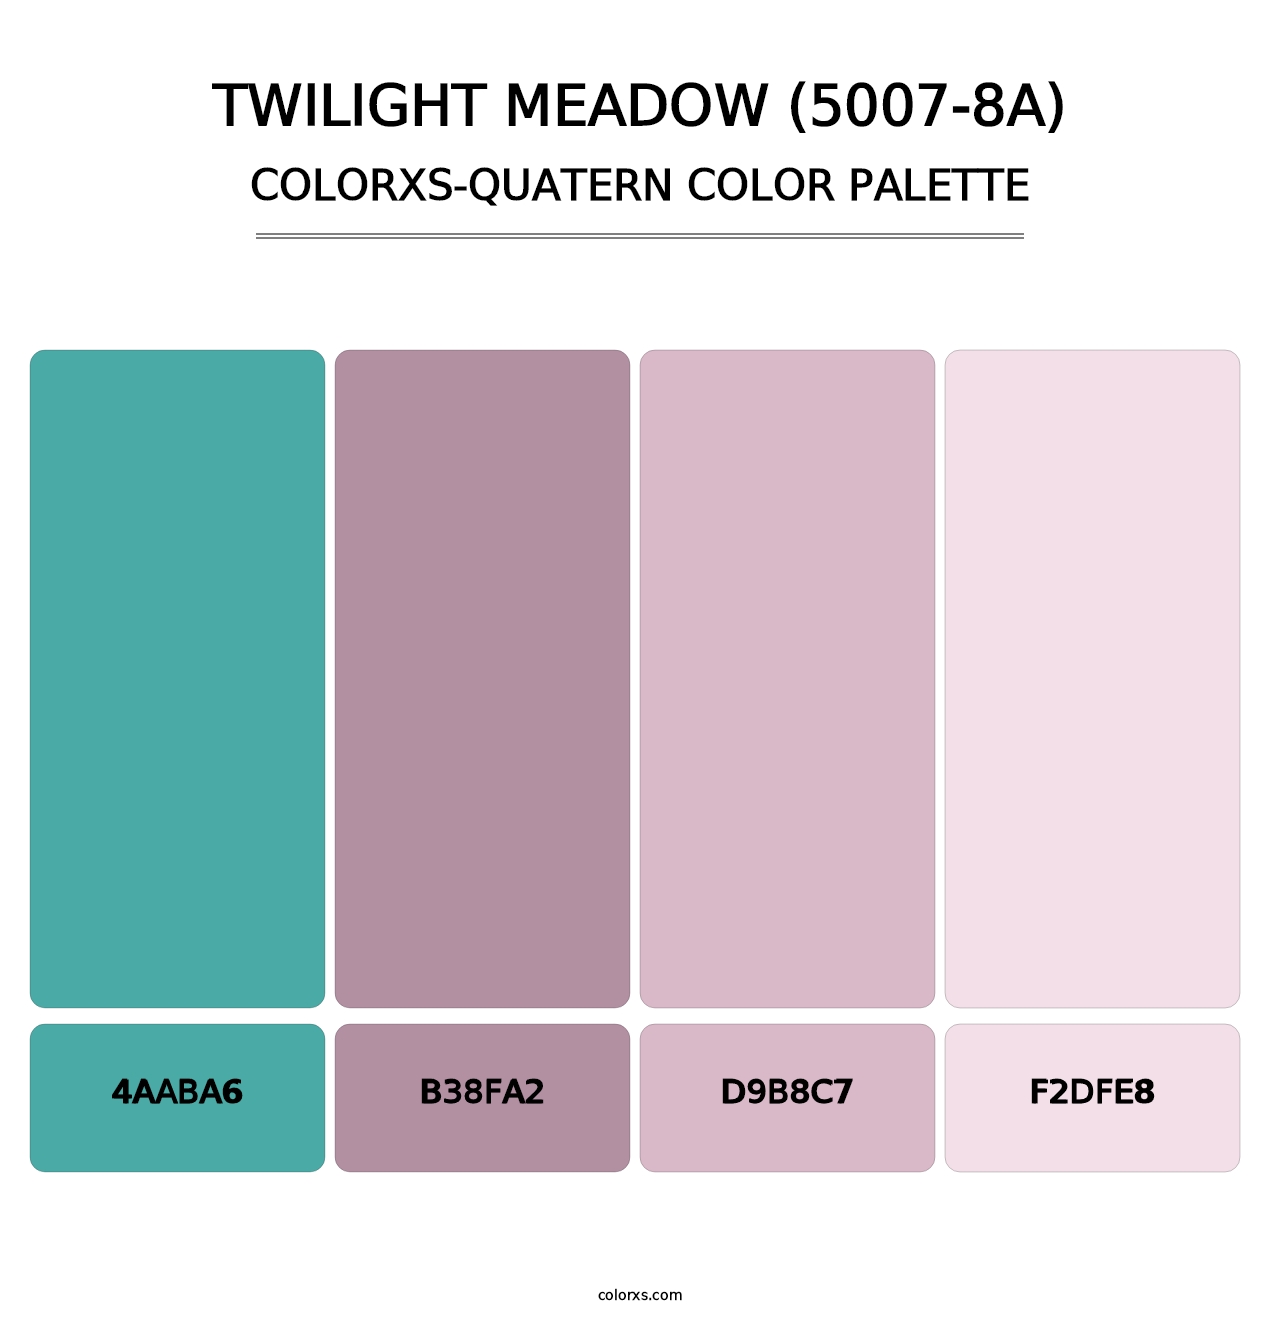 Twilight Meadow (5007-8A) - Colorxs Quatern Palette